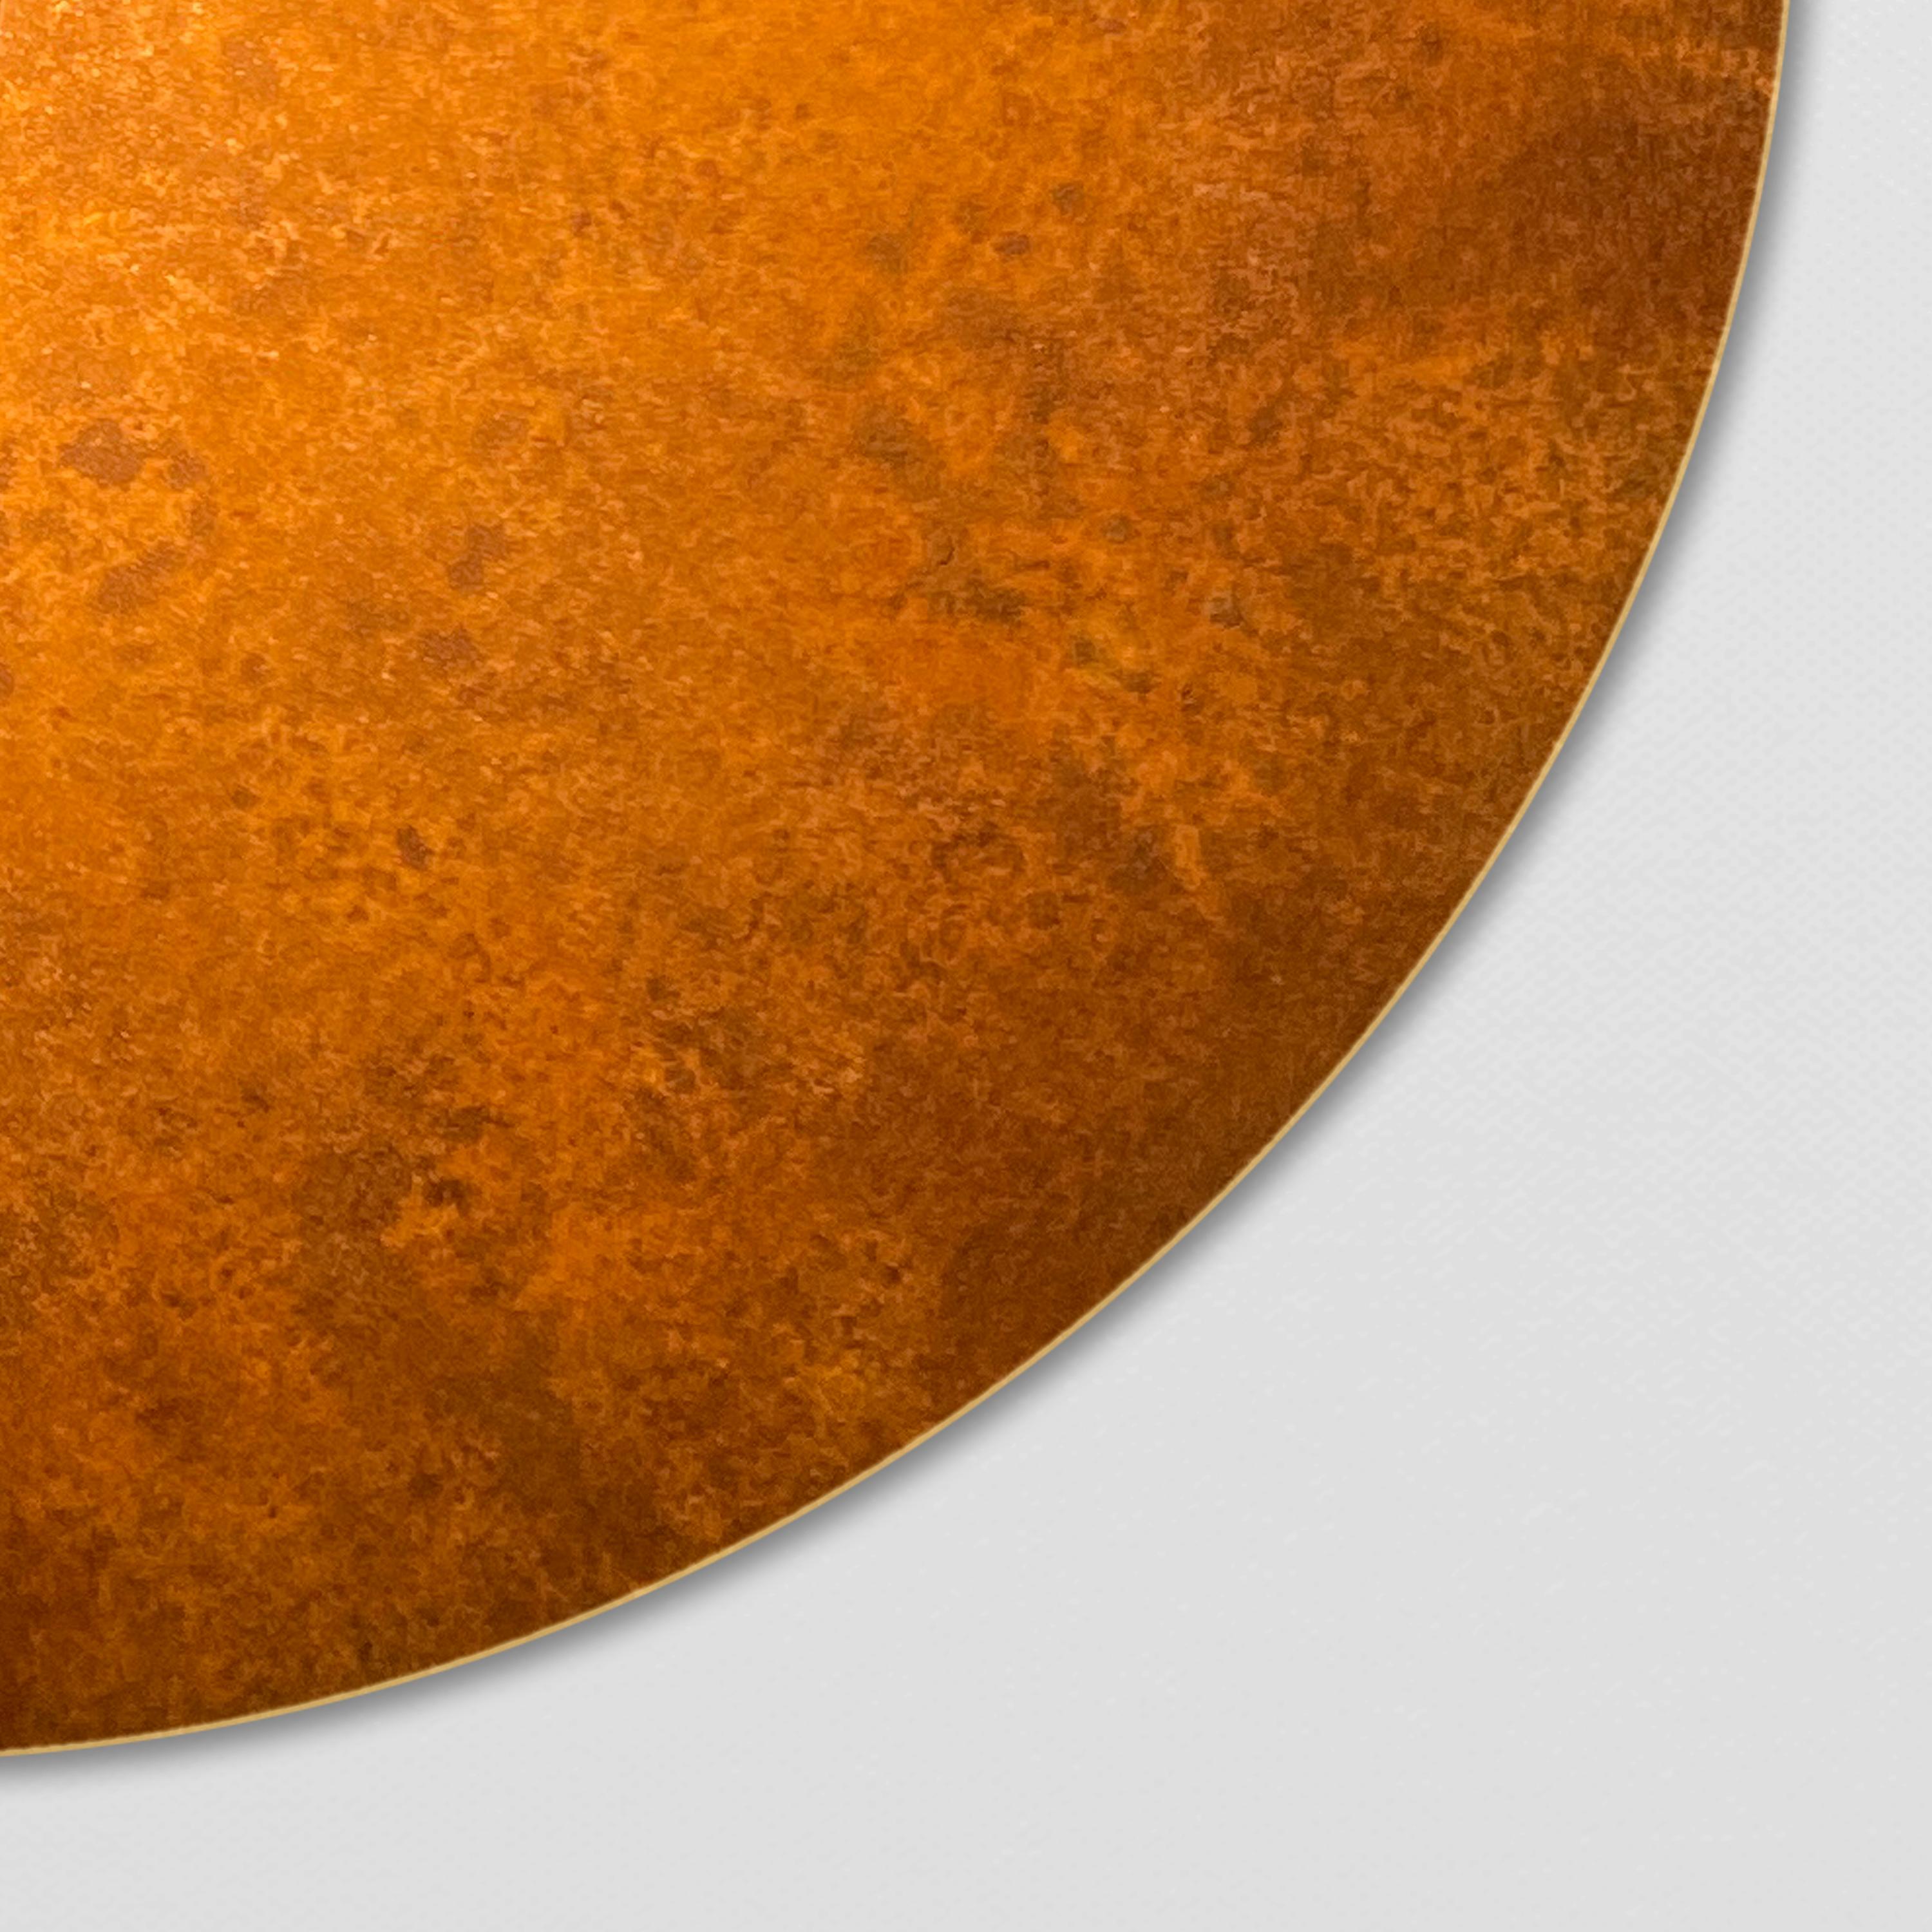 'Cosmic Rust' Artisan Handmade Rust Patinated Brass Wall Light Sconce For Sale 4